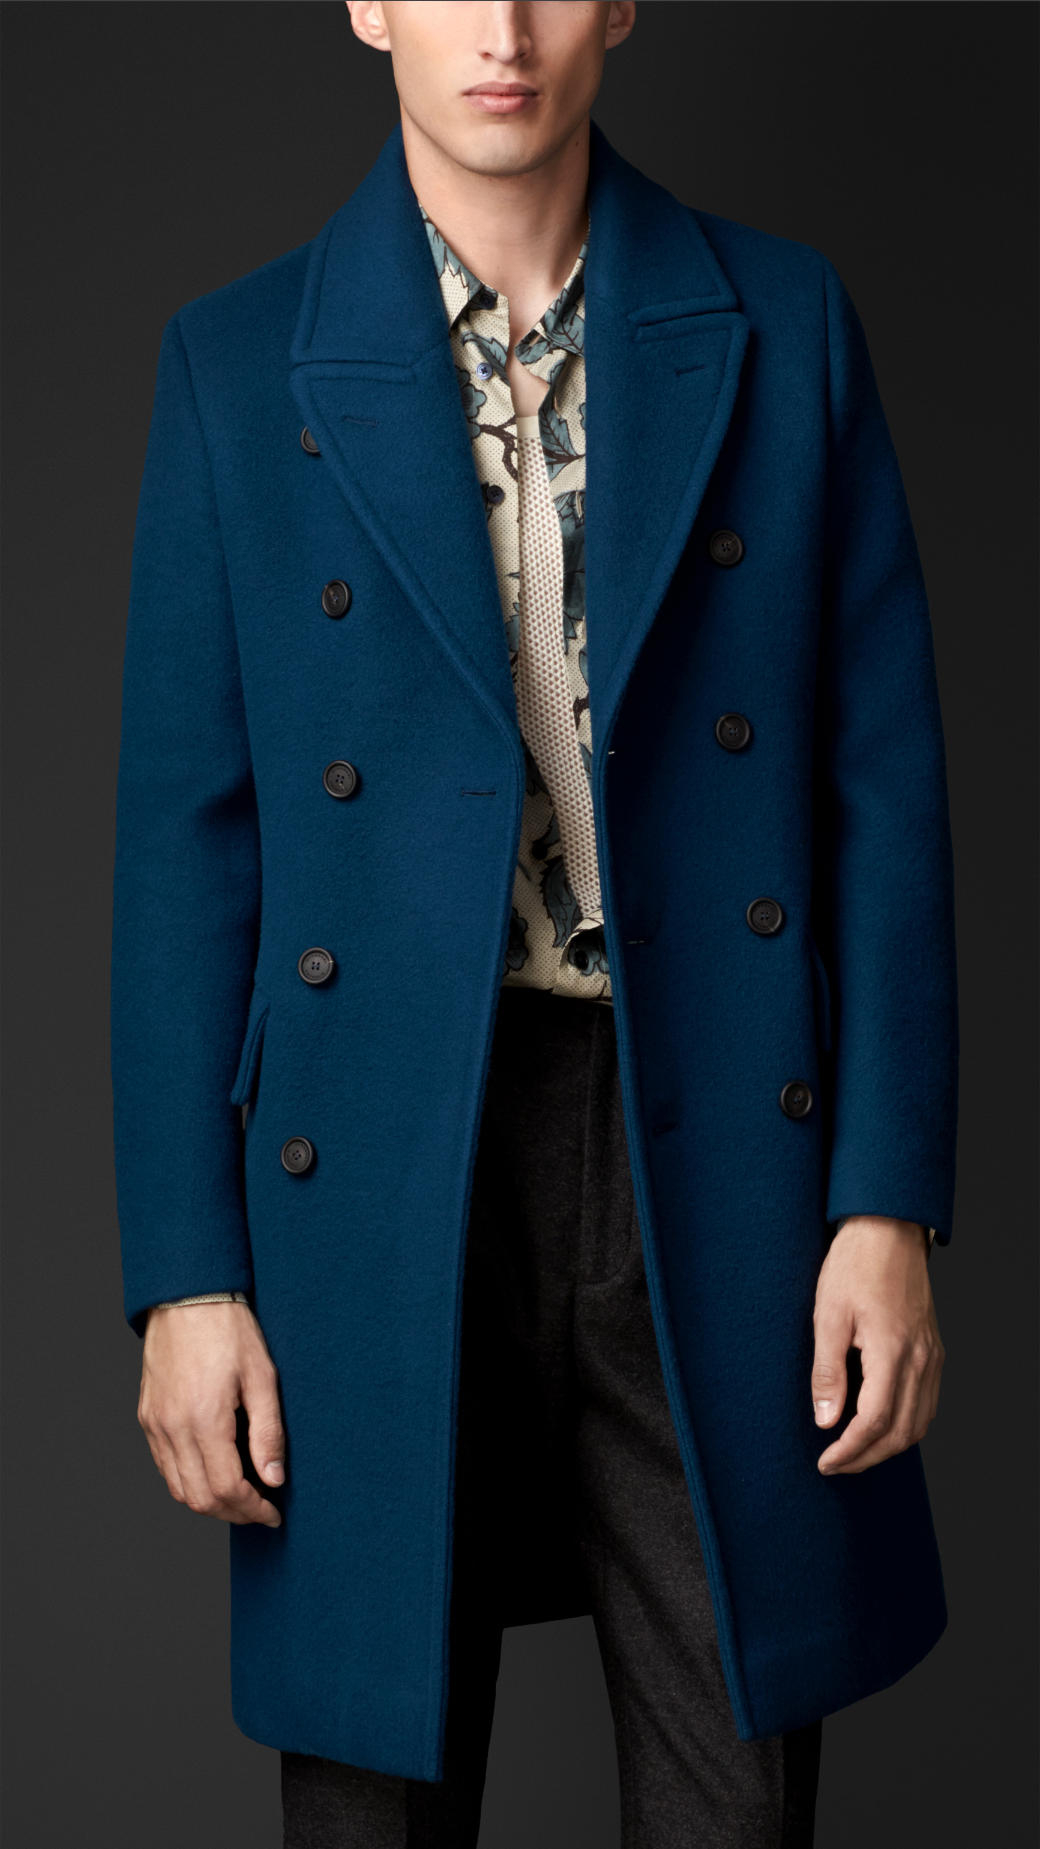 Зеленое мужское пальто. Coat Burberry man Blu. Burberry пальто мужское 2019. Двубортное пальто мужское. Синее пальто мужское.